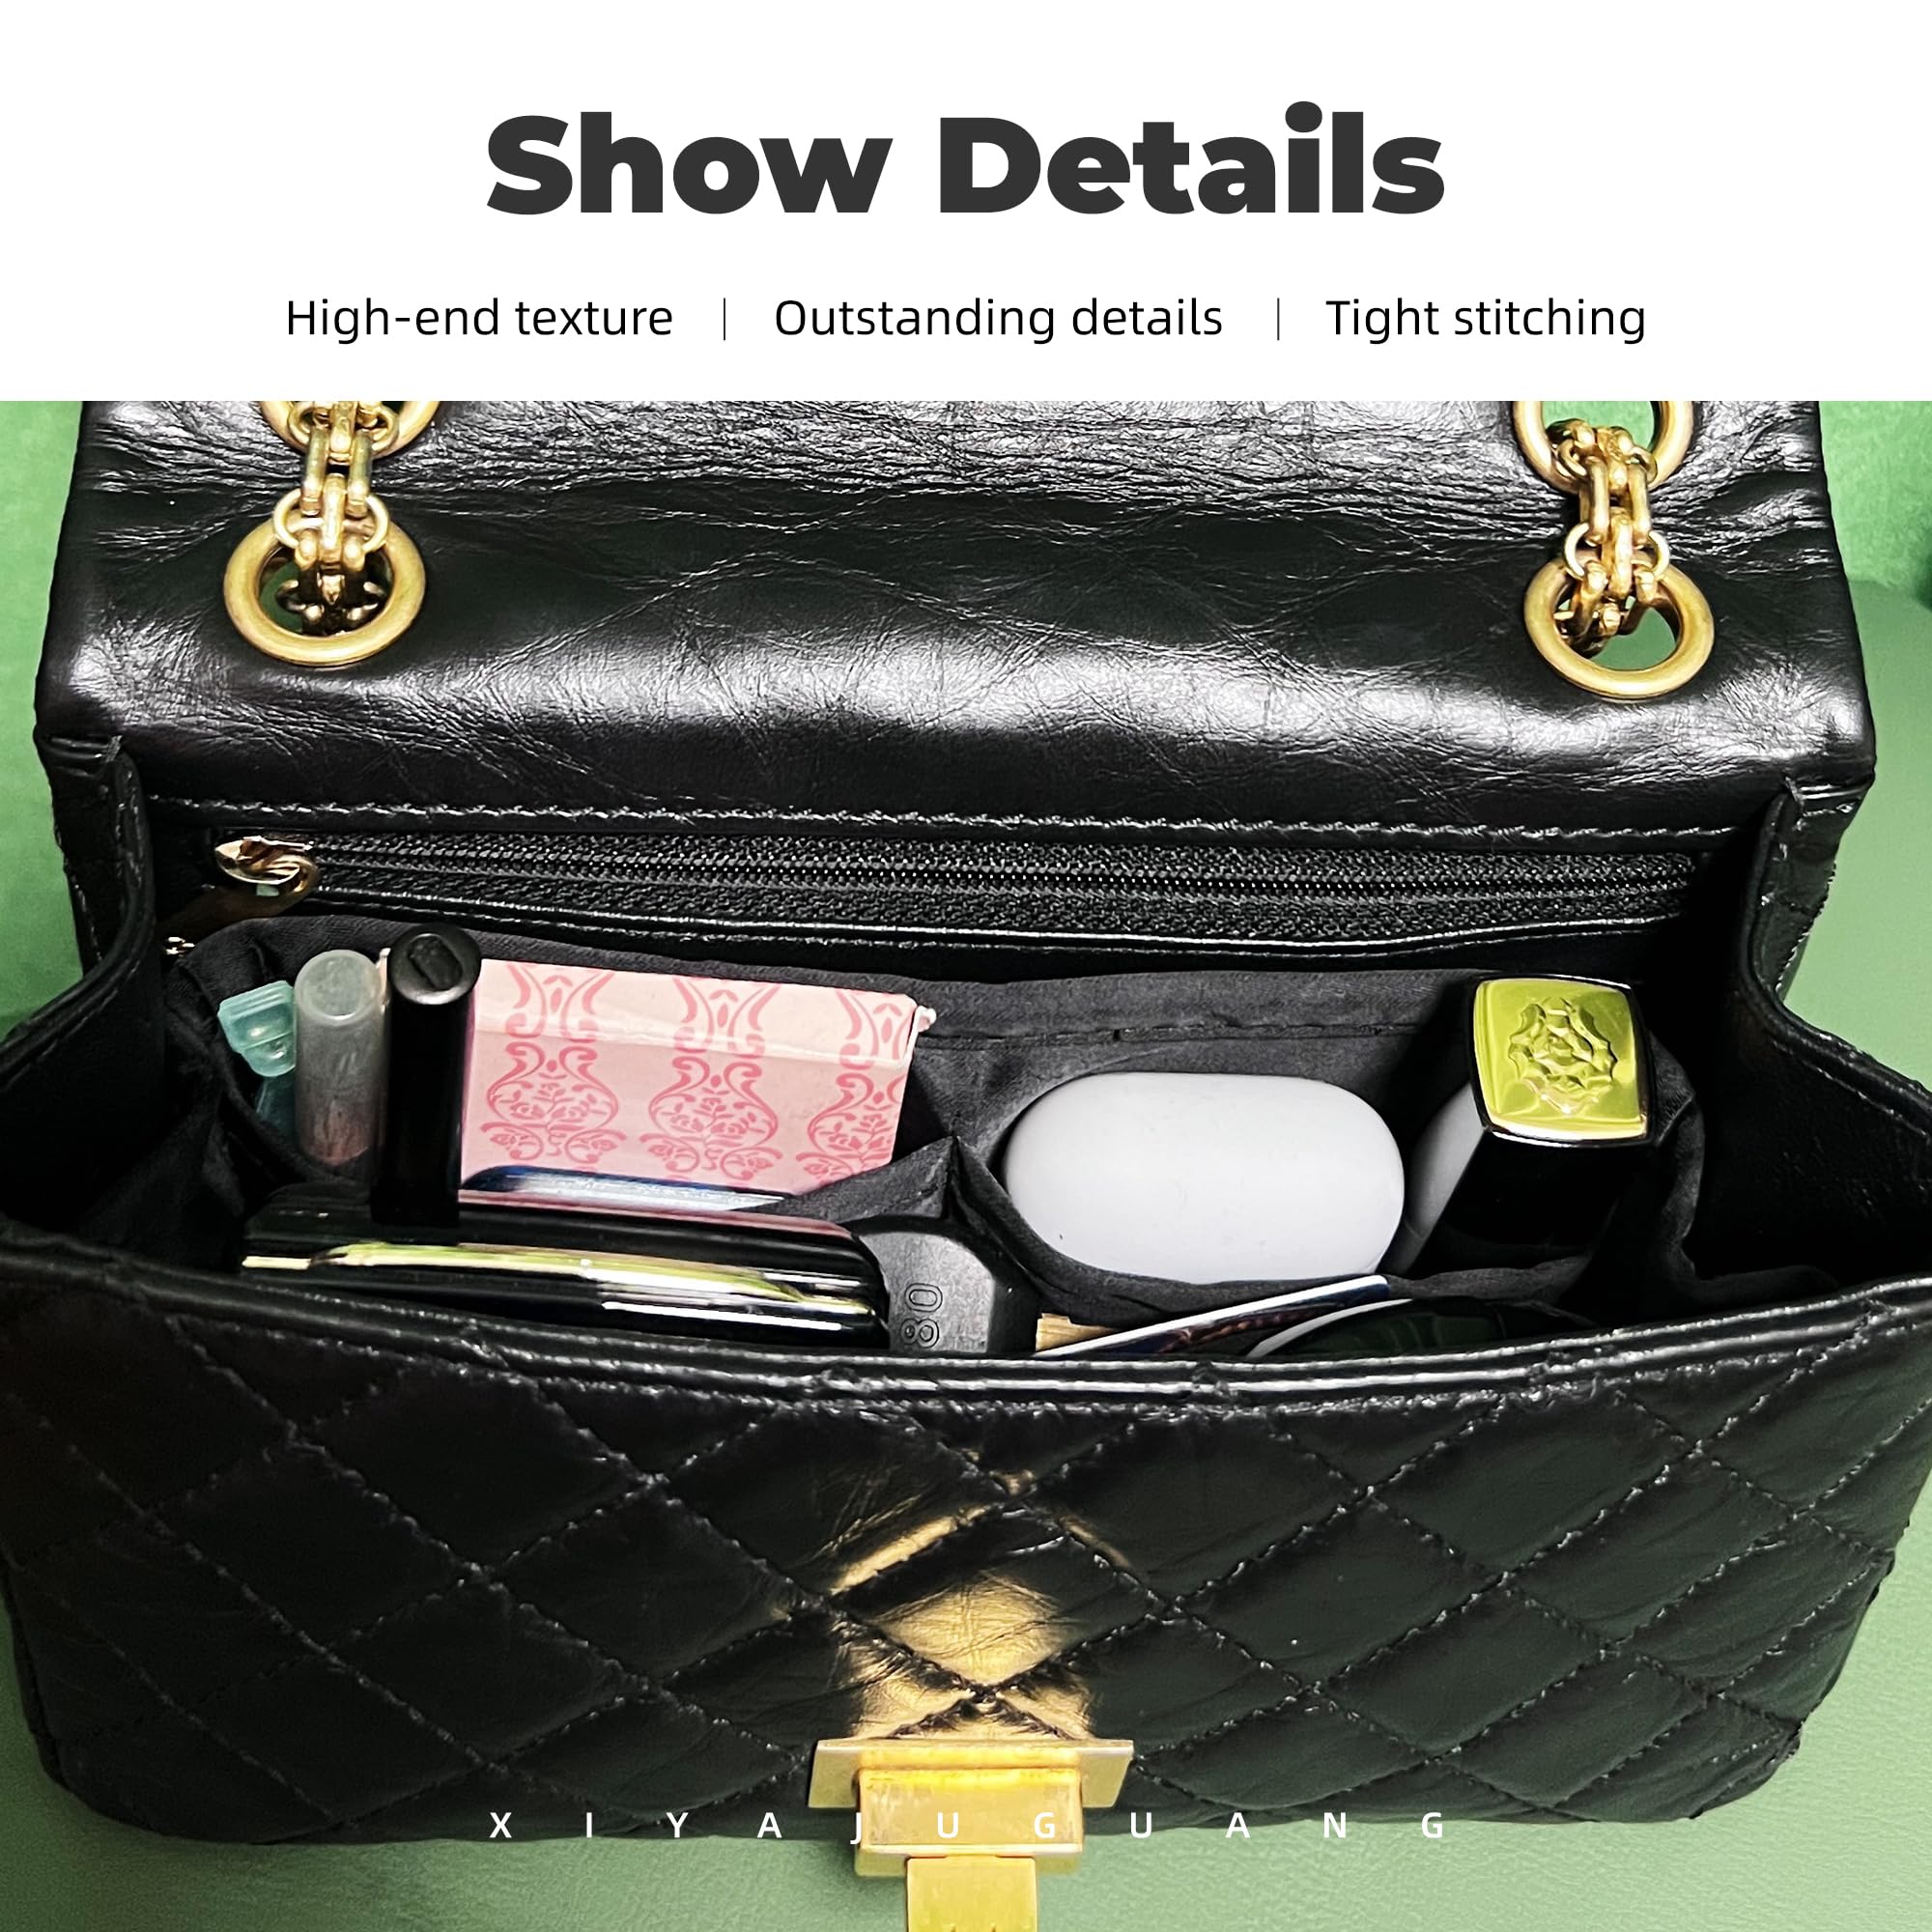 XYJG Purse Handbag Silky Organizer Insert Keep Bag Shape Fits LV Chanel 2.55 22P/22A/23p/Small/Jumbo/Jumbo/Maxi Bags, Luxury Handbag Tote Lightweight Sturdy(2.55 Mini 22P,Black)